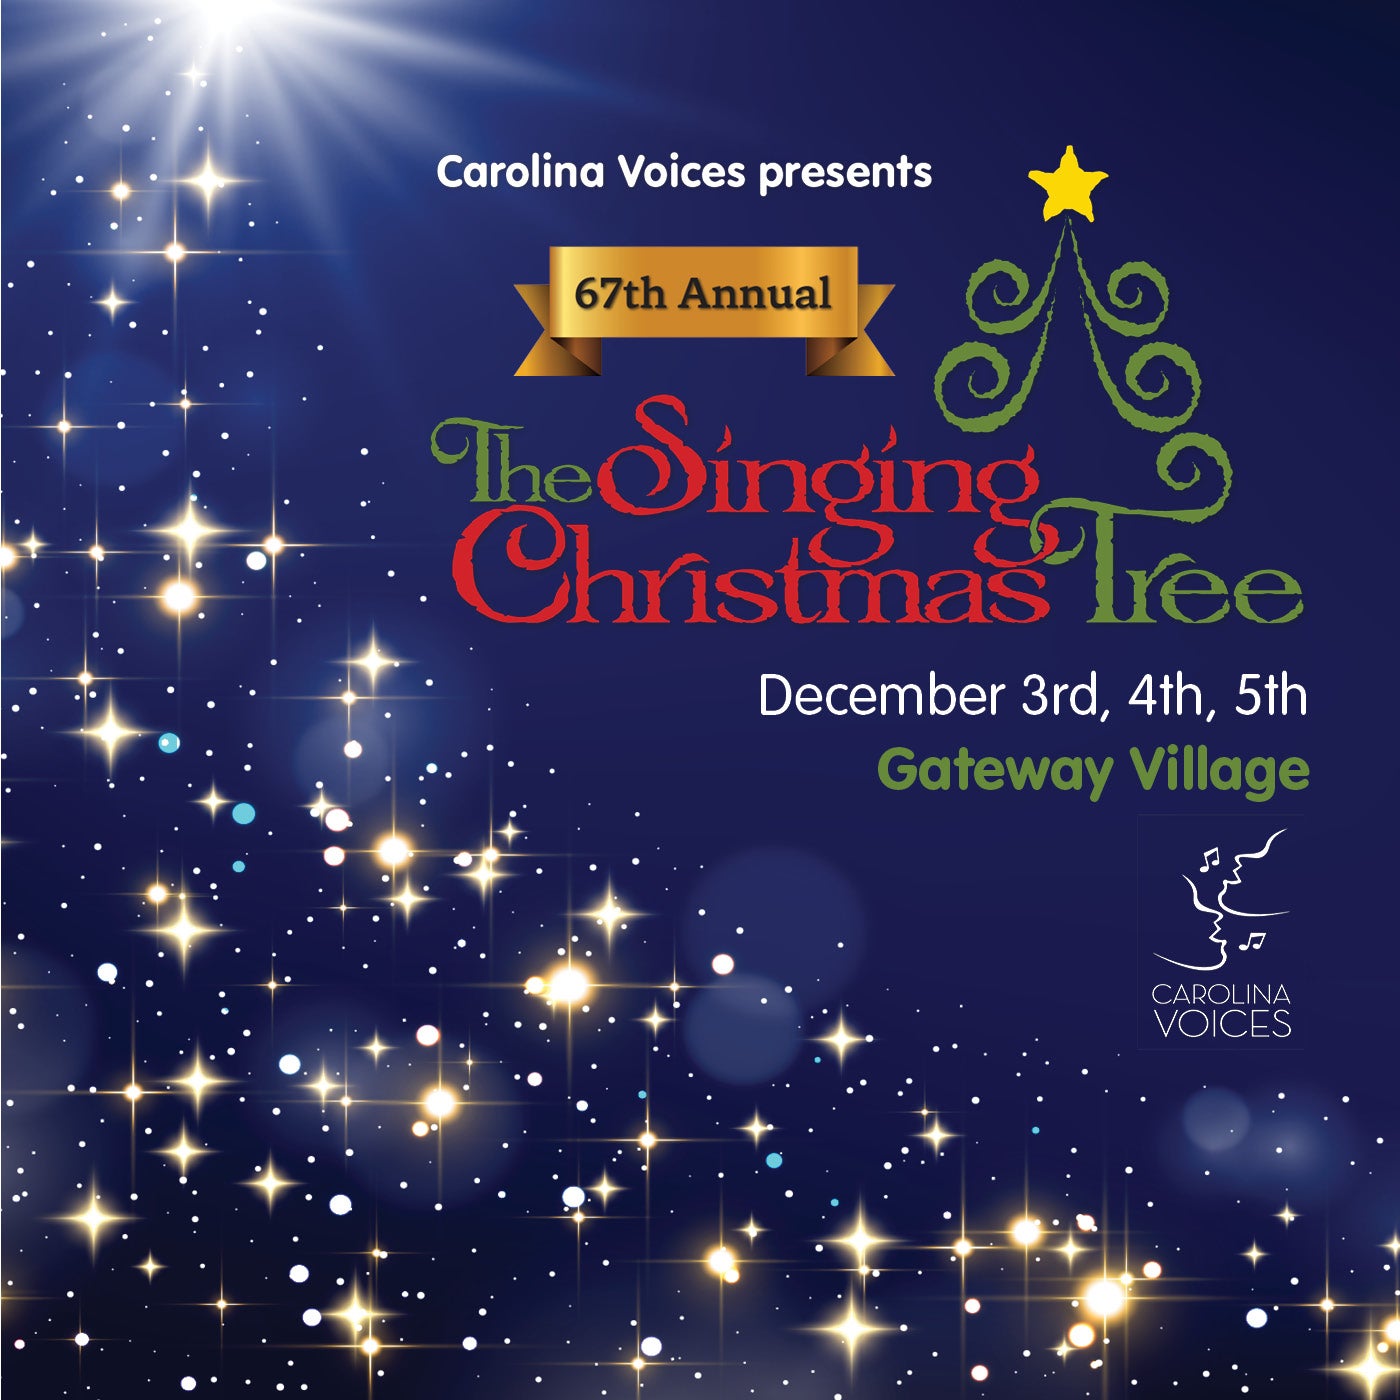 Carolina Voices' 67th Annual Singing Christmas Tree CarolinaTix